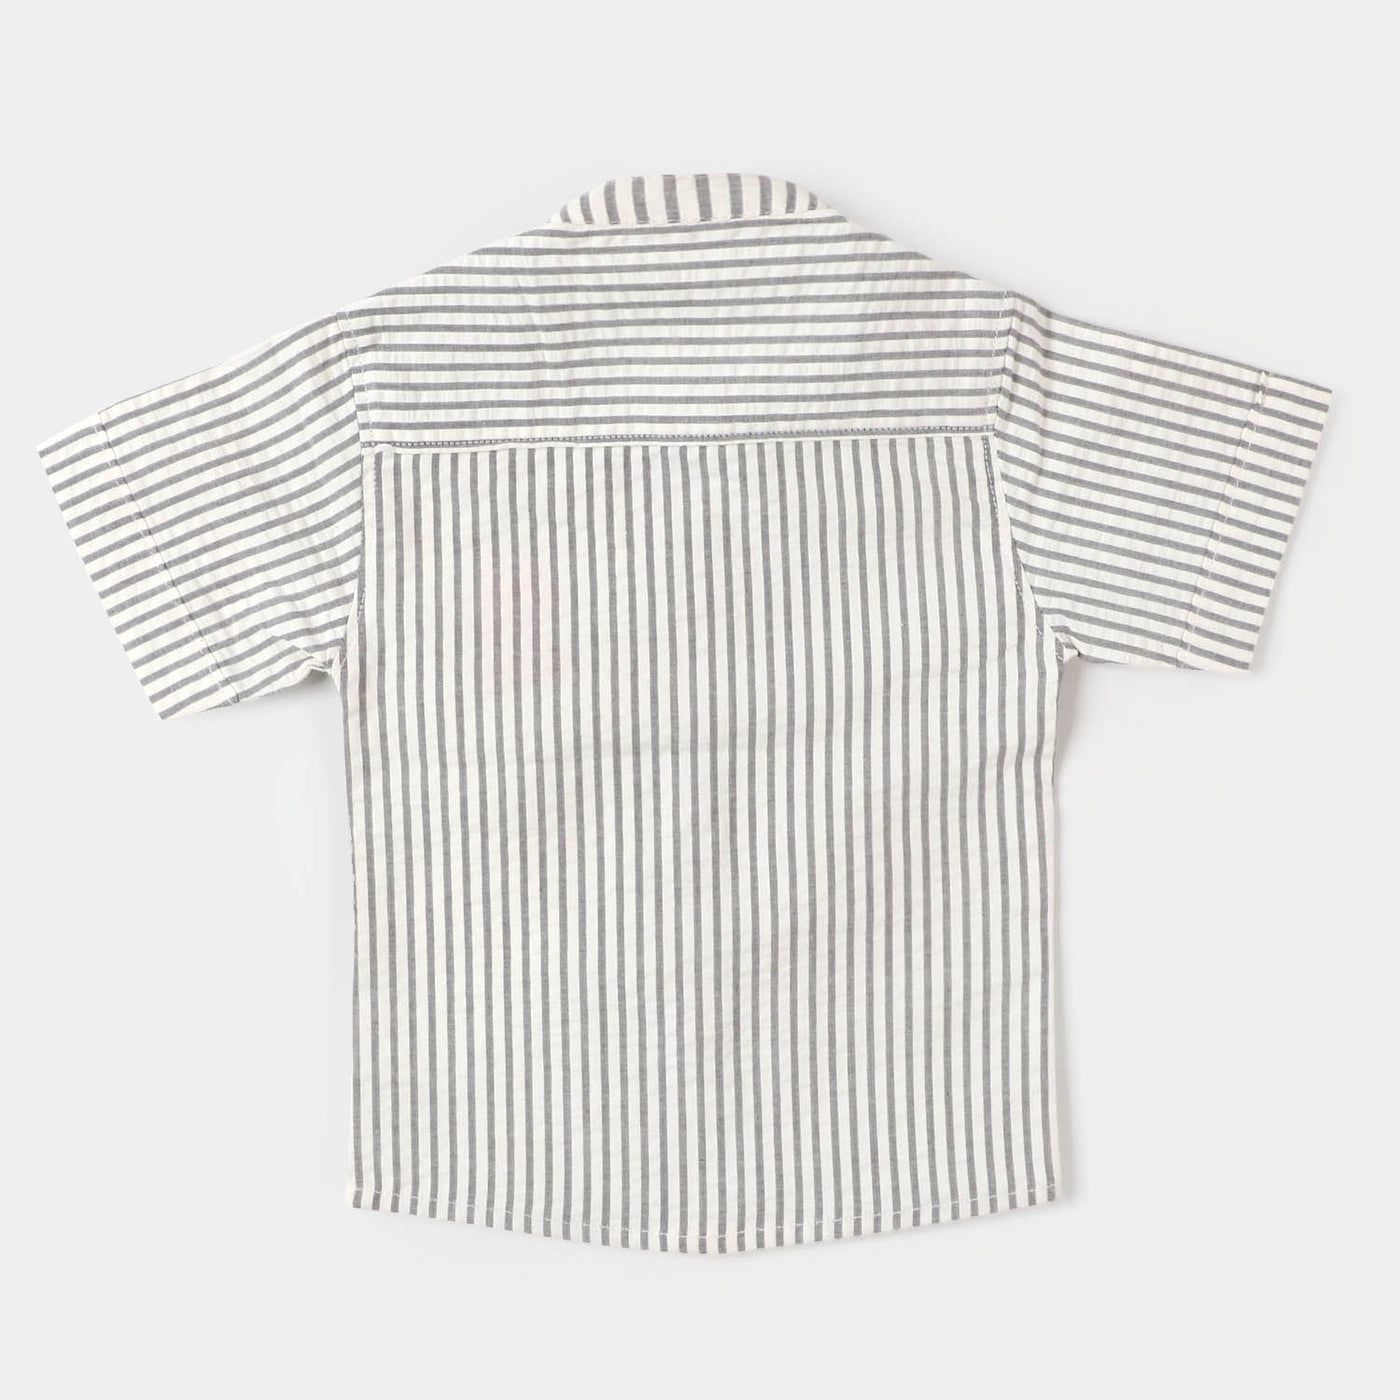 Infant Boys Cotton Casual Shirt Palm Stripes - Striper